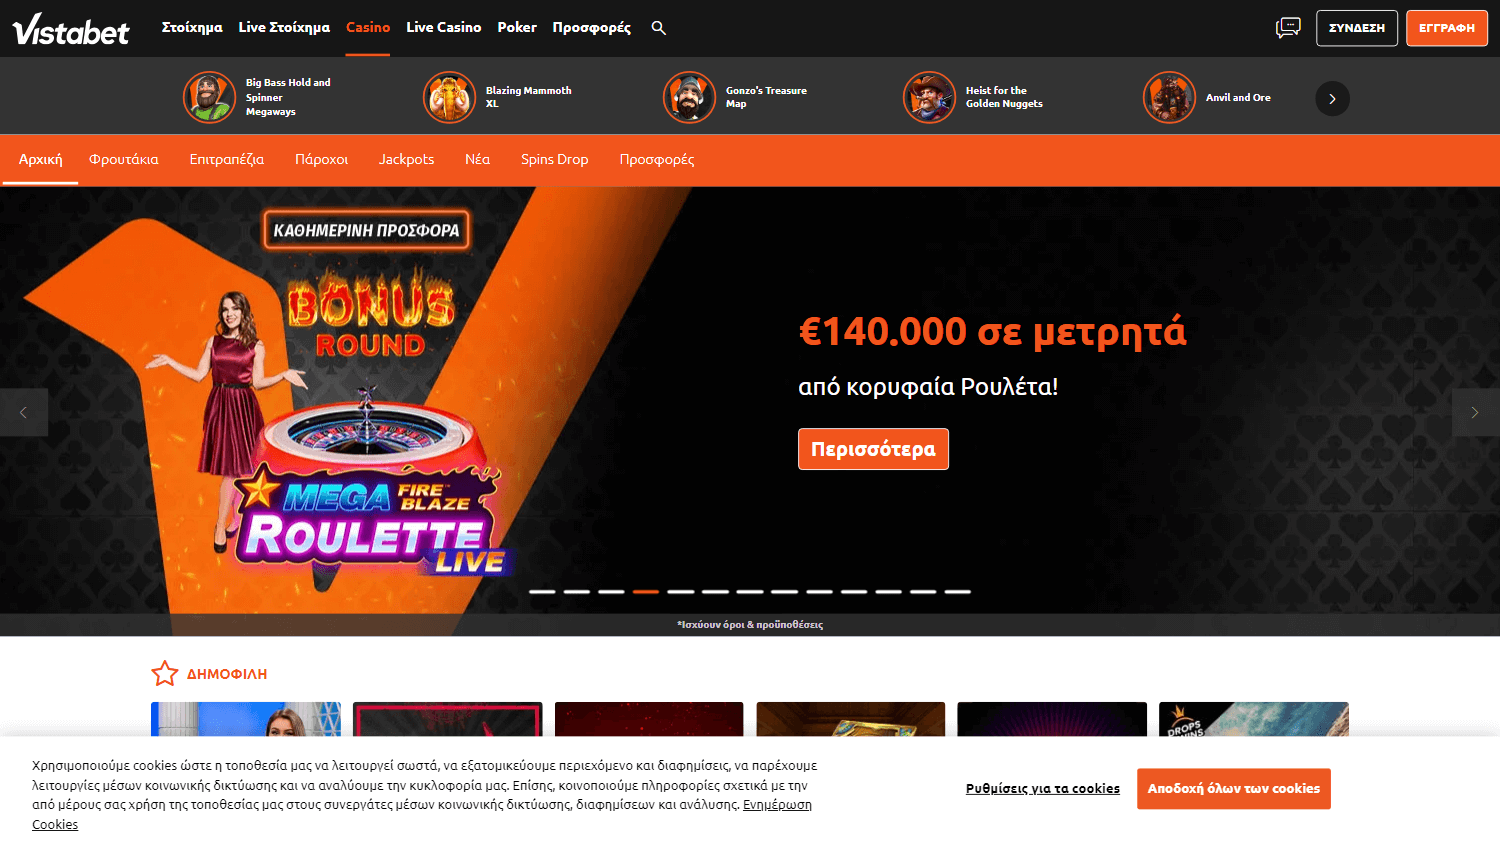 vistabet_casino_homepage_desktop